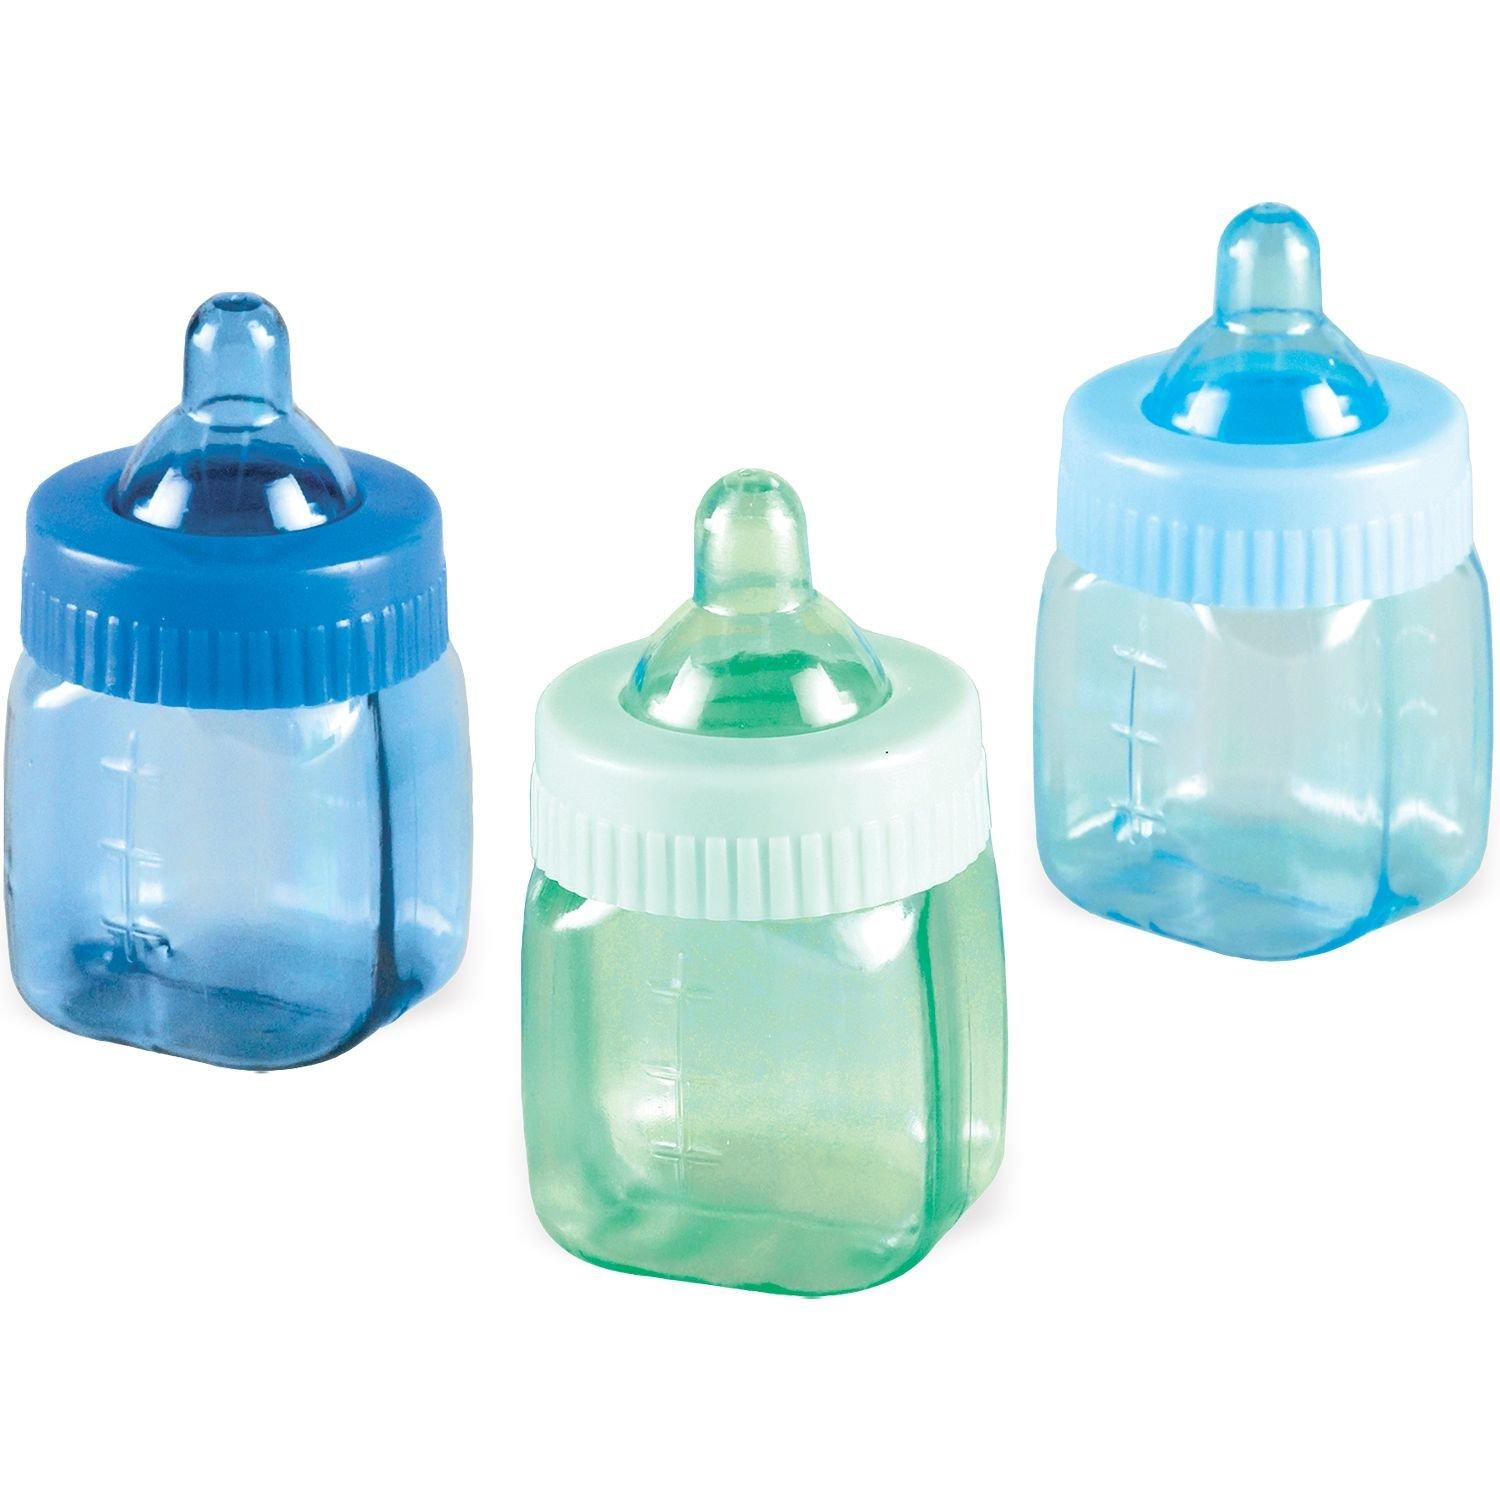 Mini Blue Bottles Baby Shower Favors 6ct | Party City